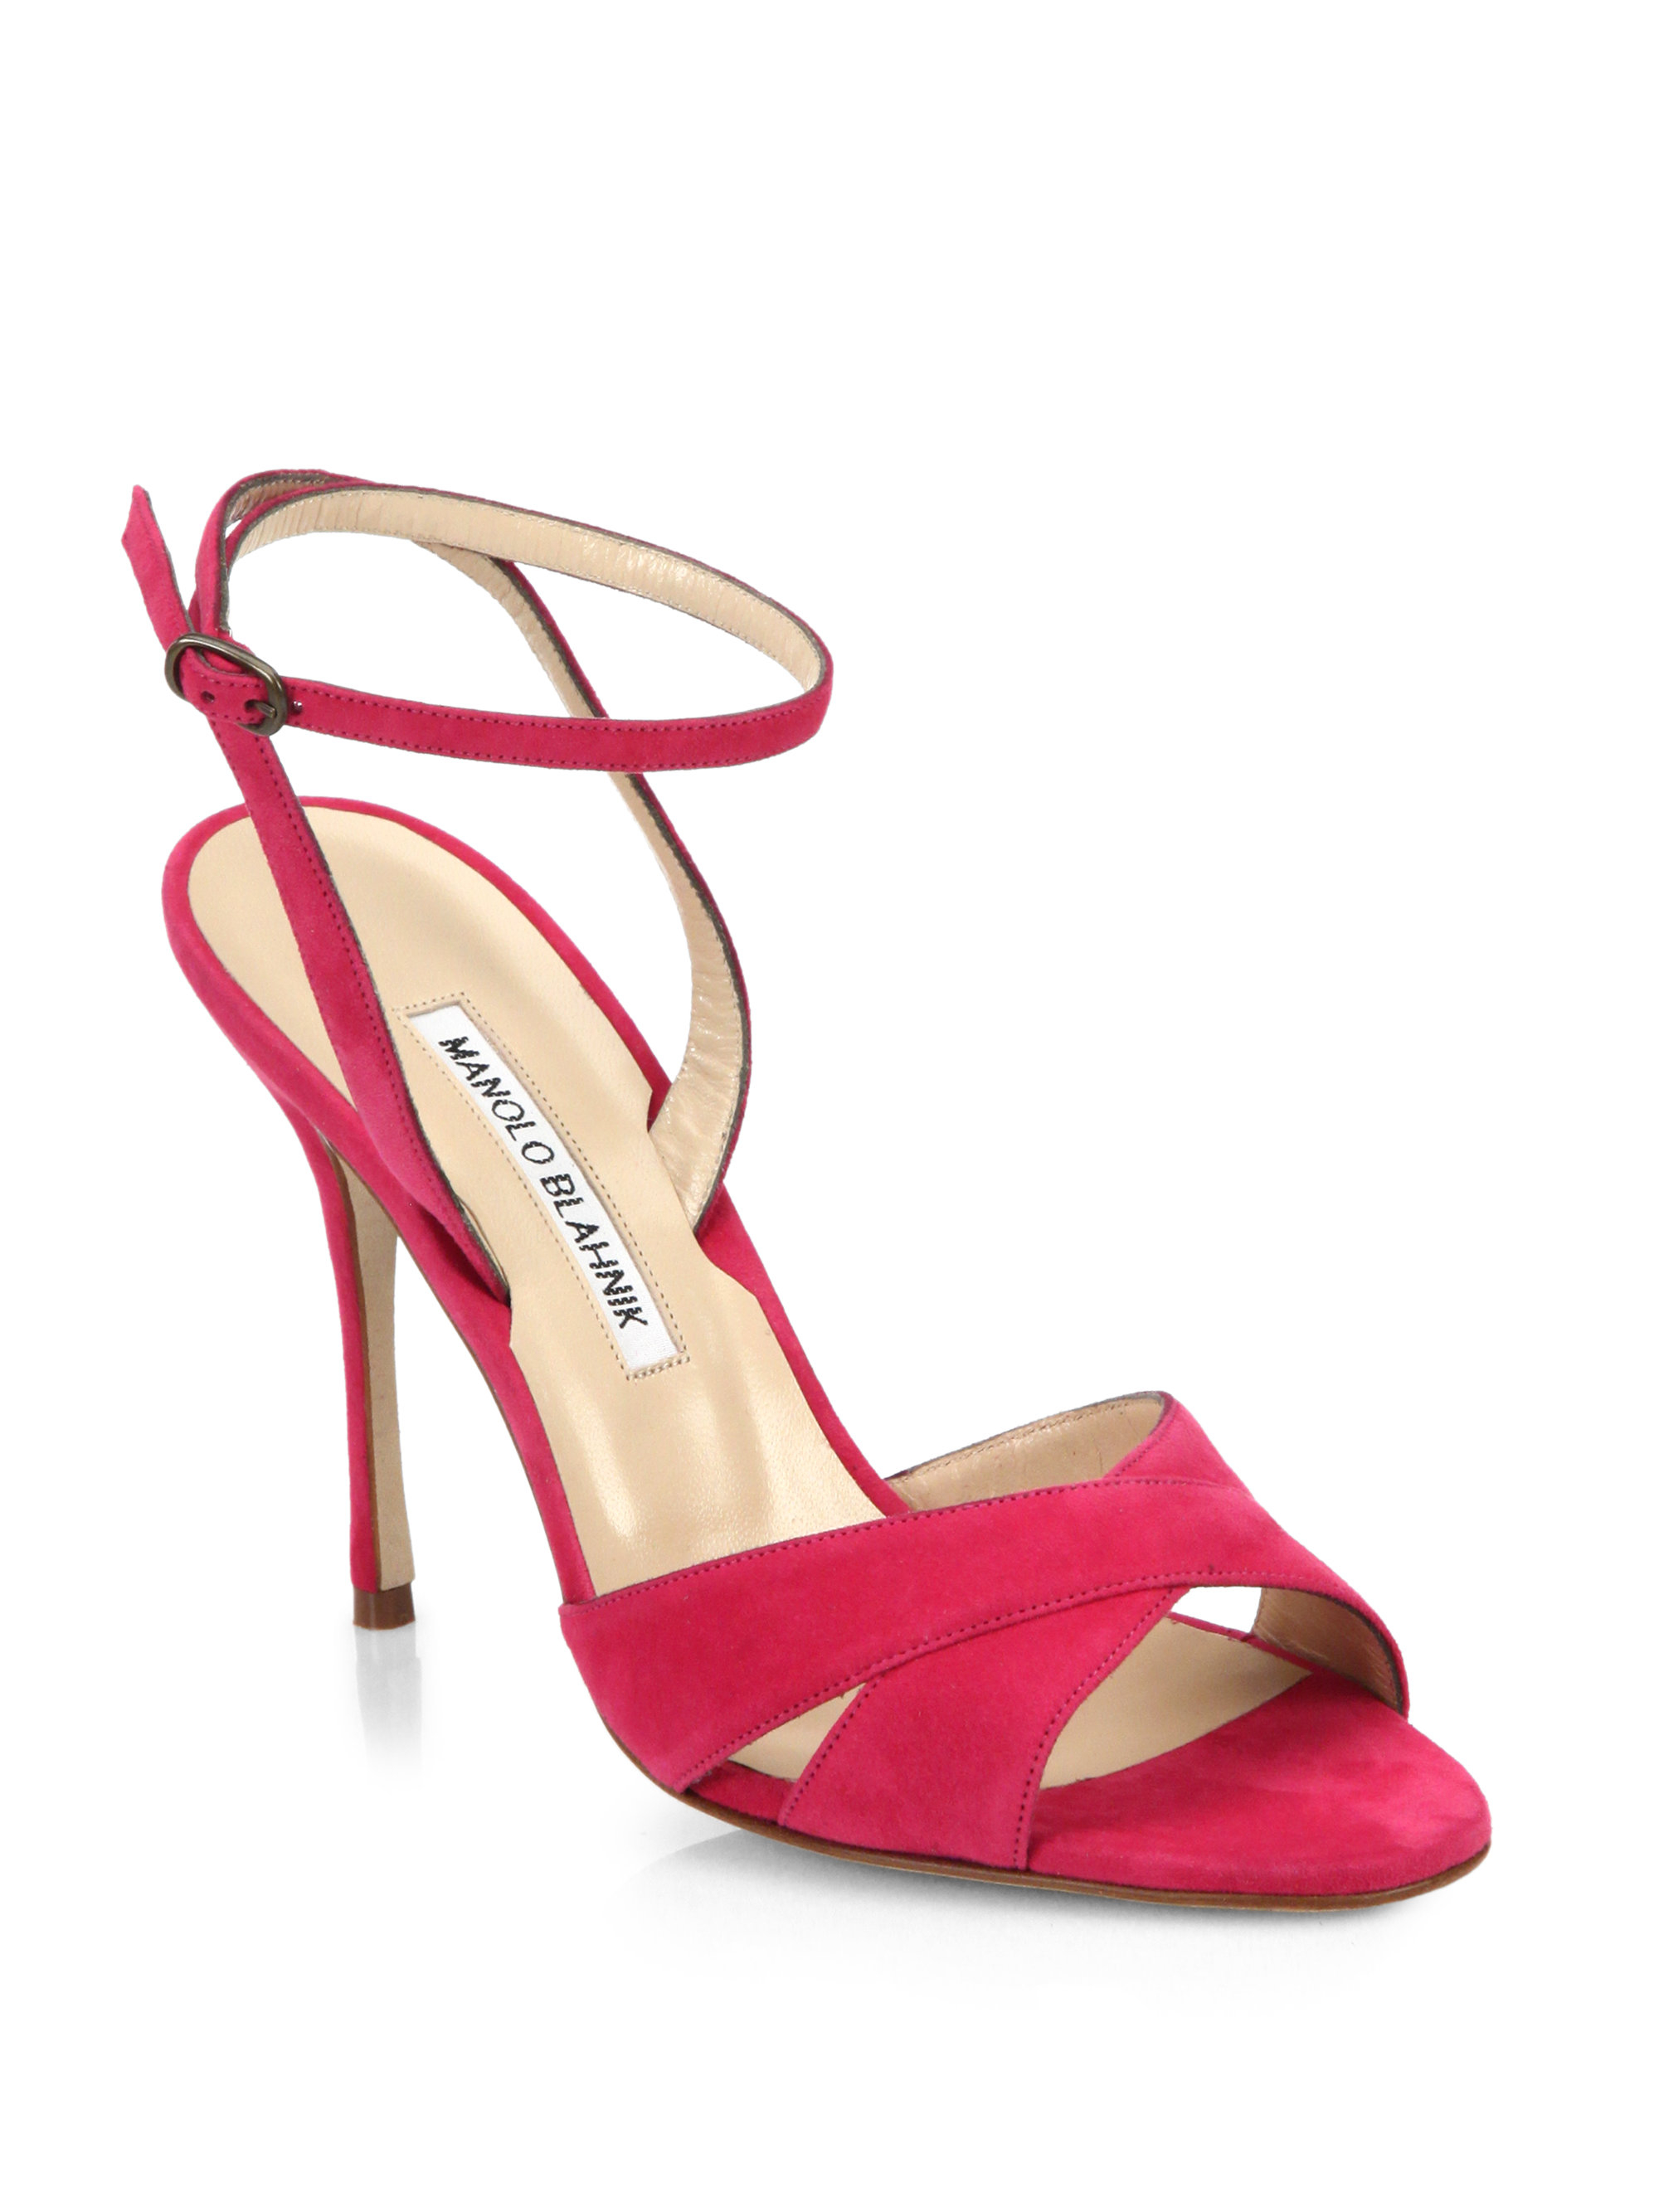 Manolo Blahnik Orlana Suede Ankle-Strap Sandals in Pink (FUSCHIA) | Lyst